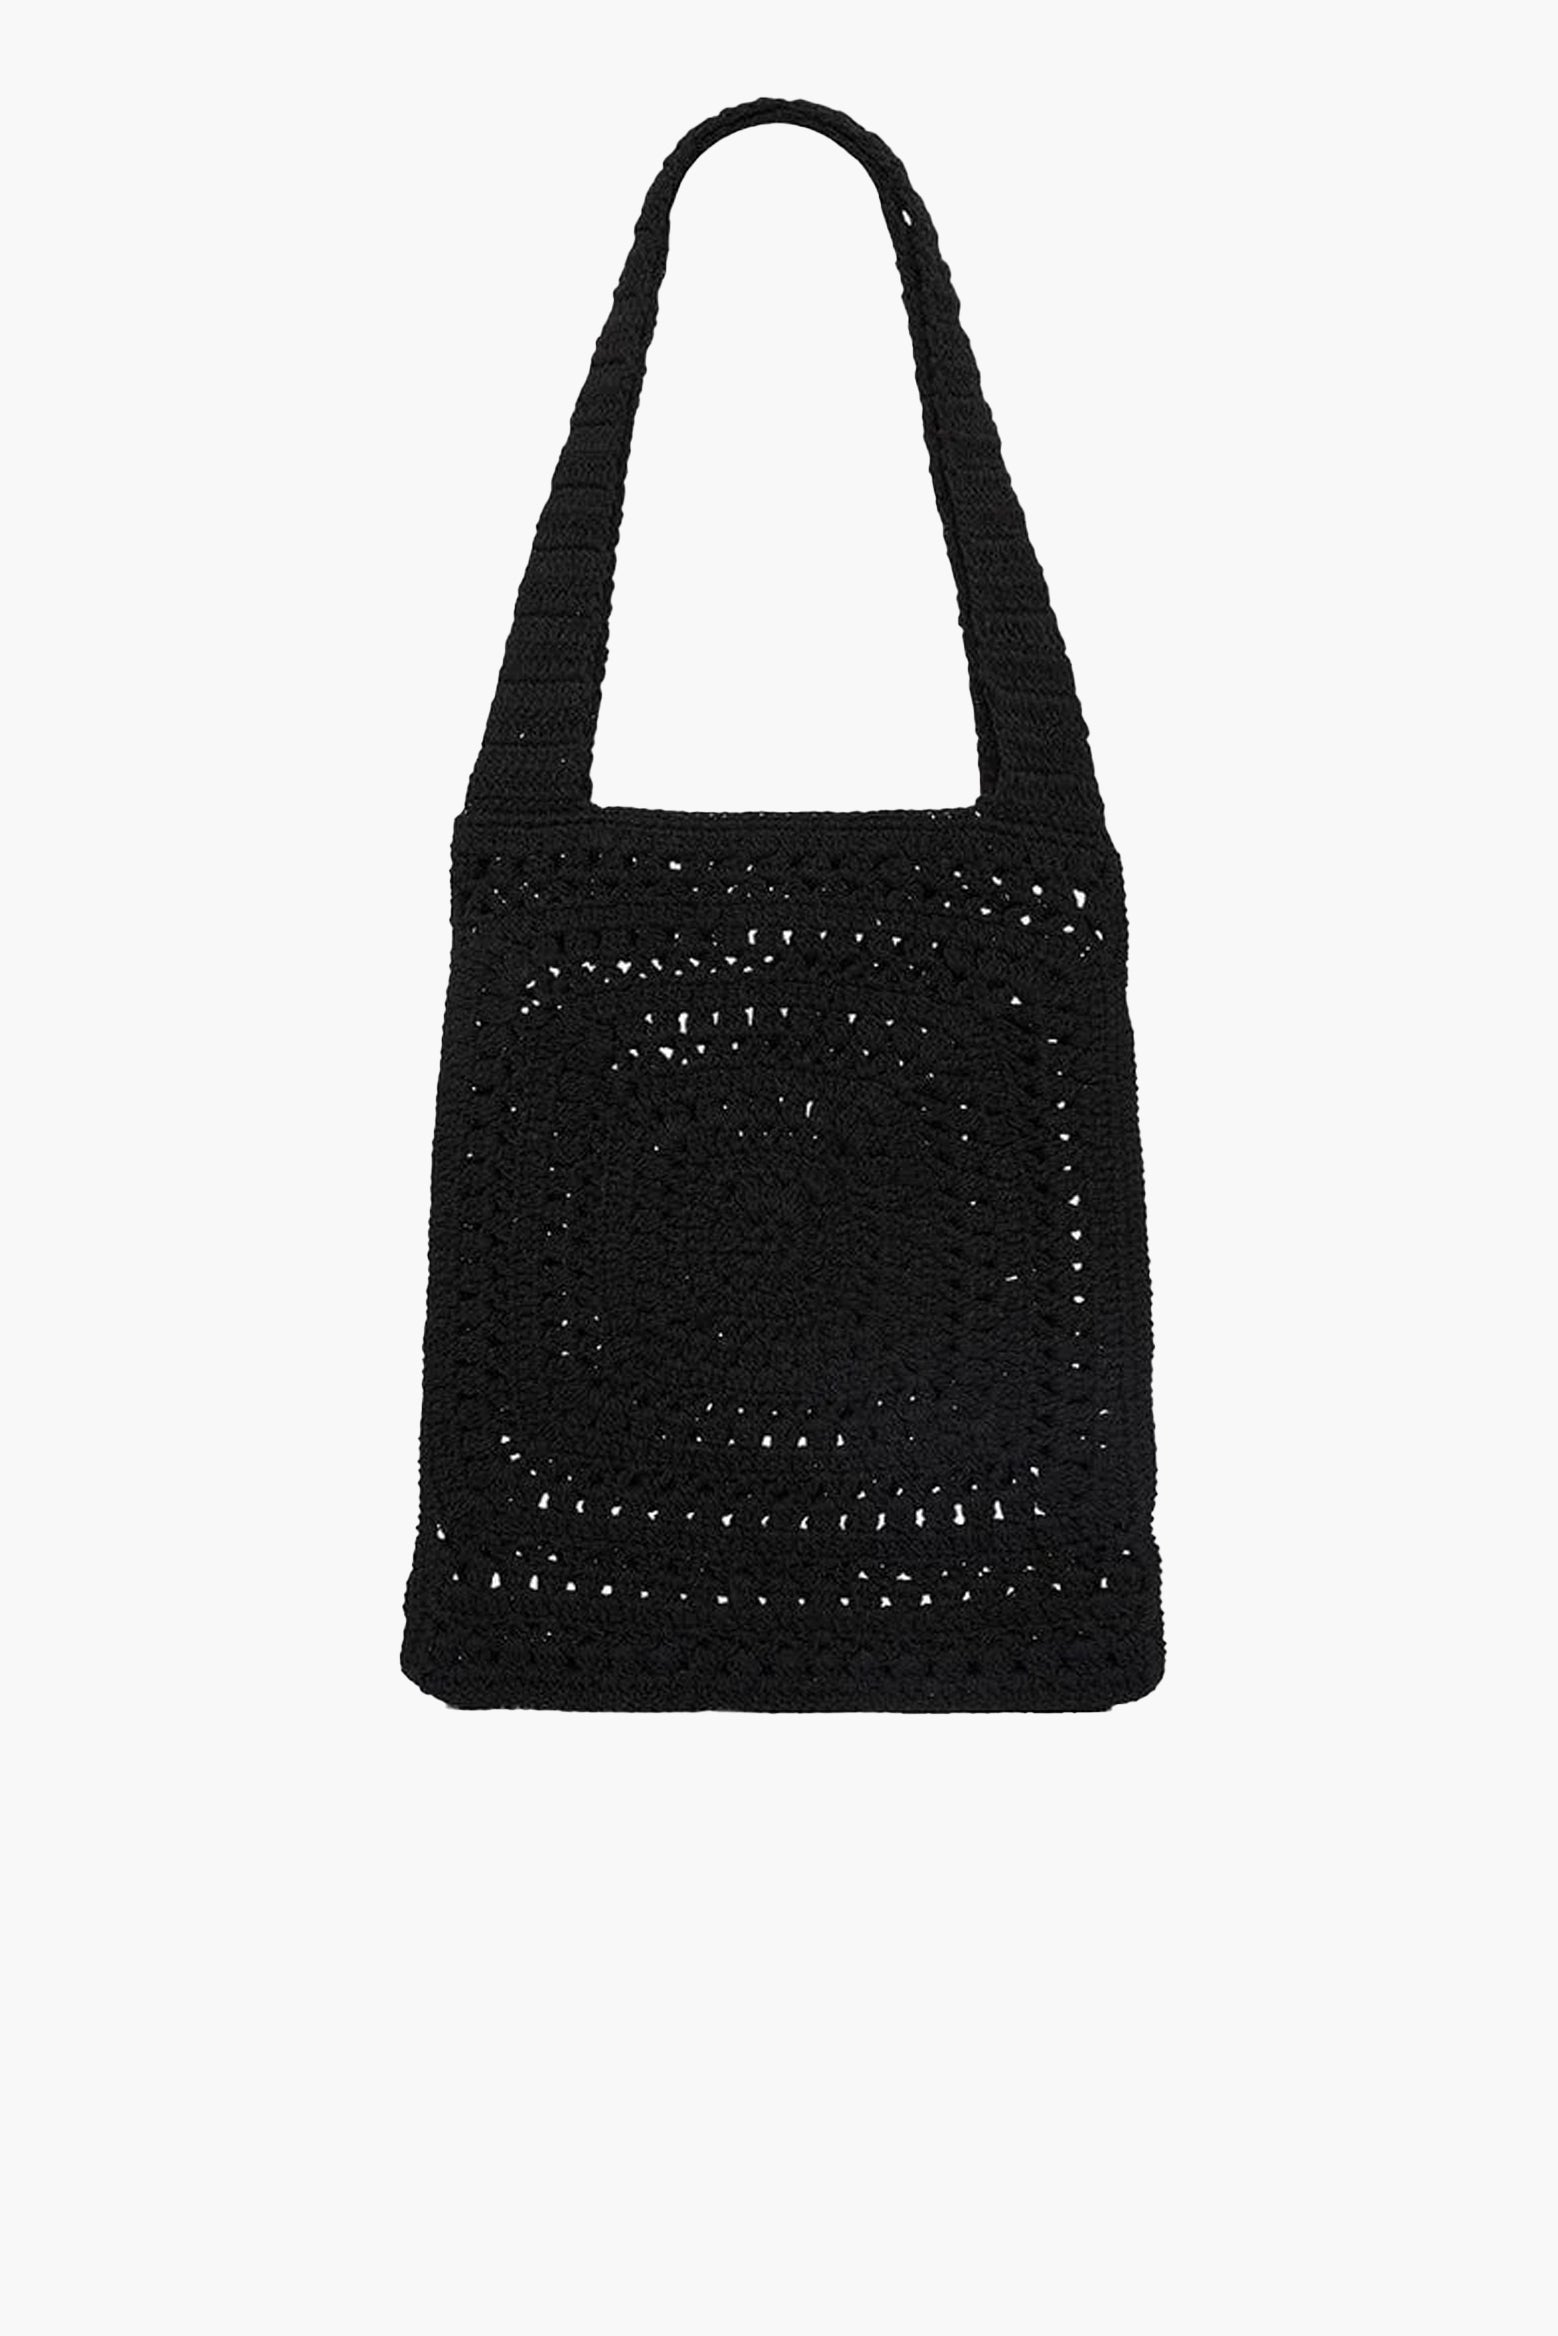 Faithfull The Brand Piccolo Crochet Bag in Black available at The New Trend Australia.